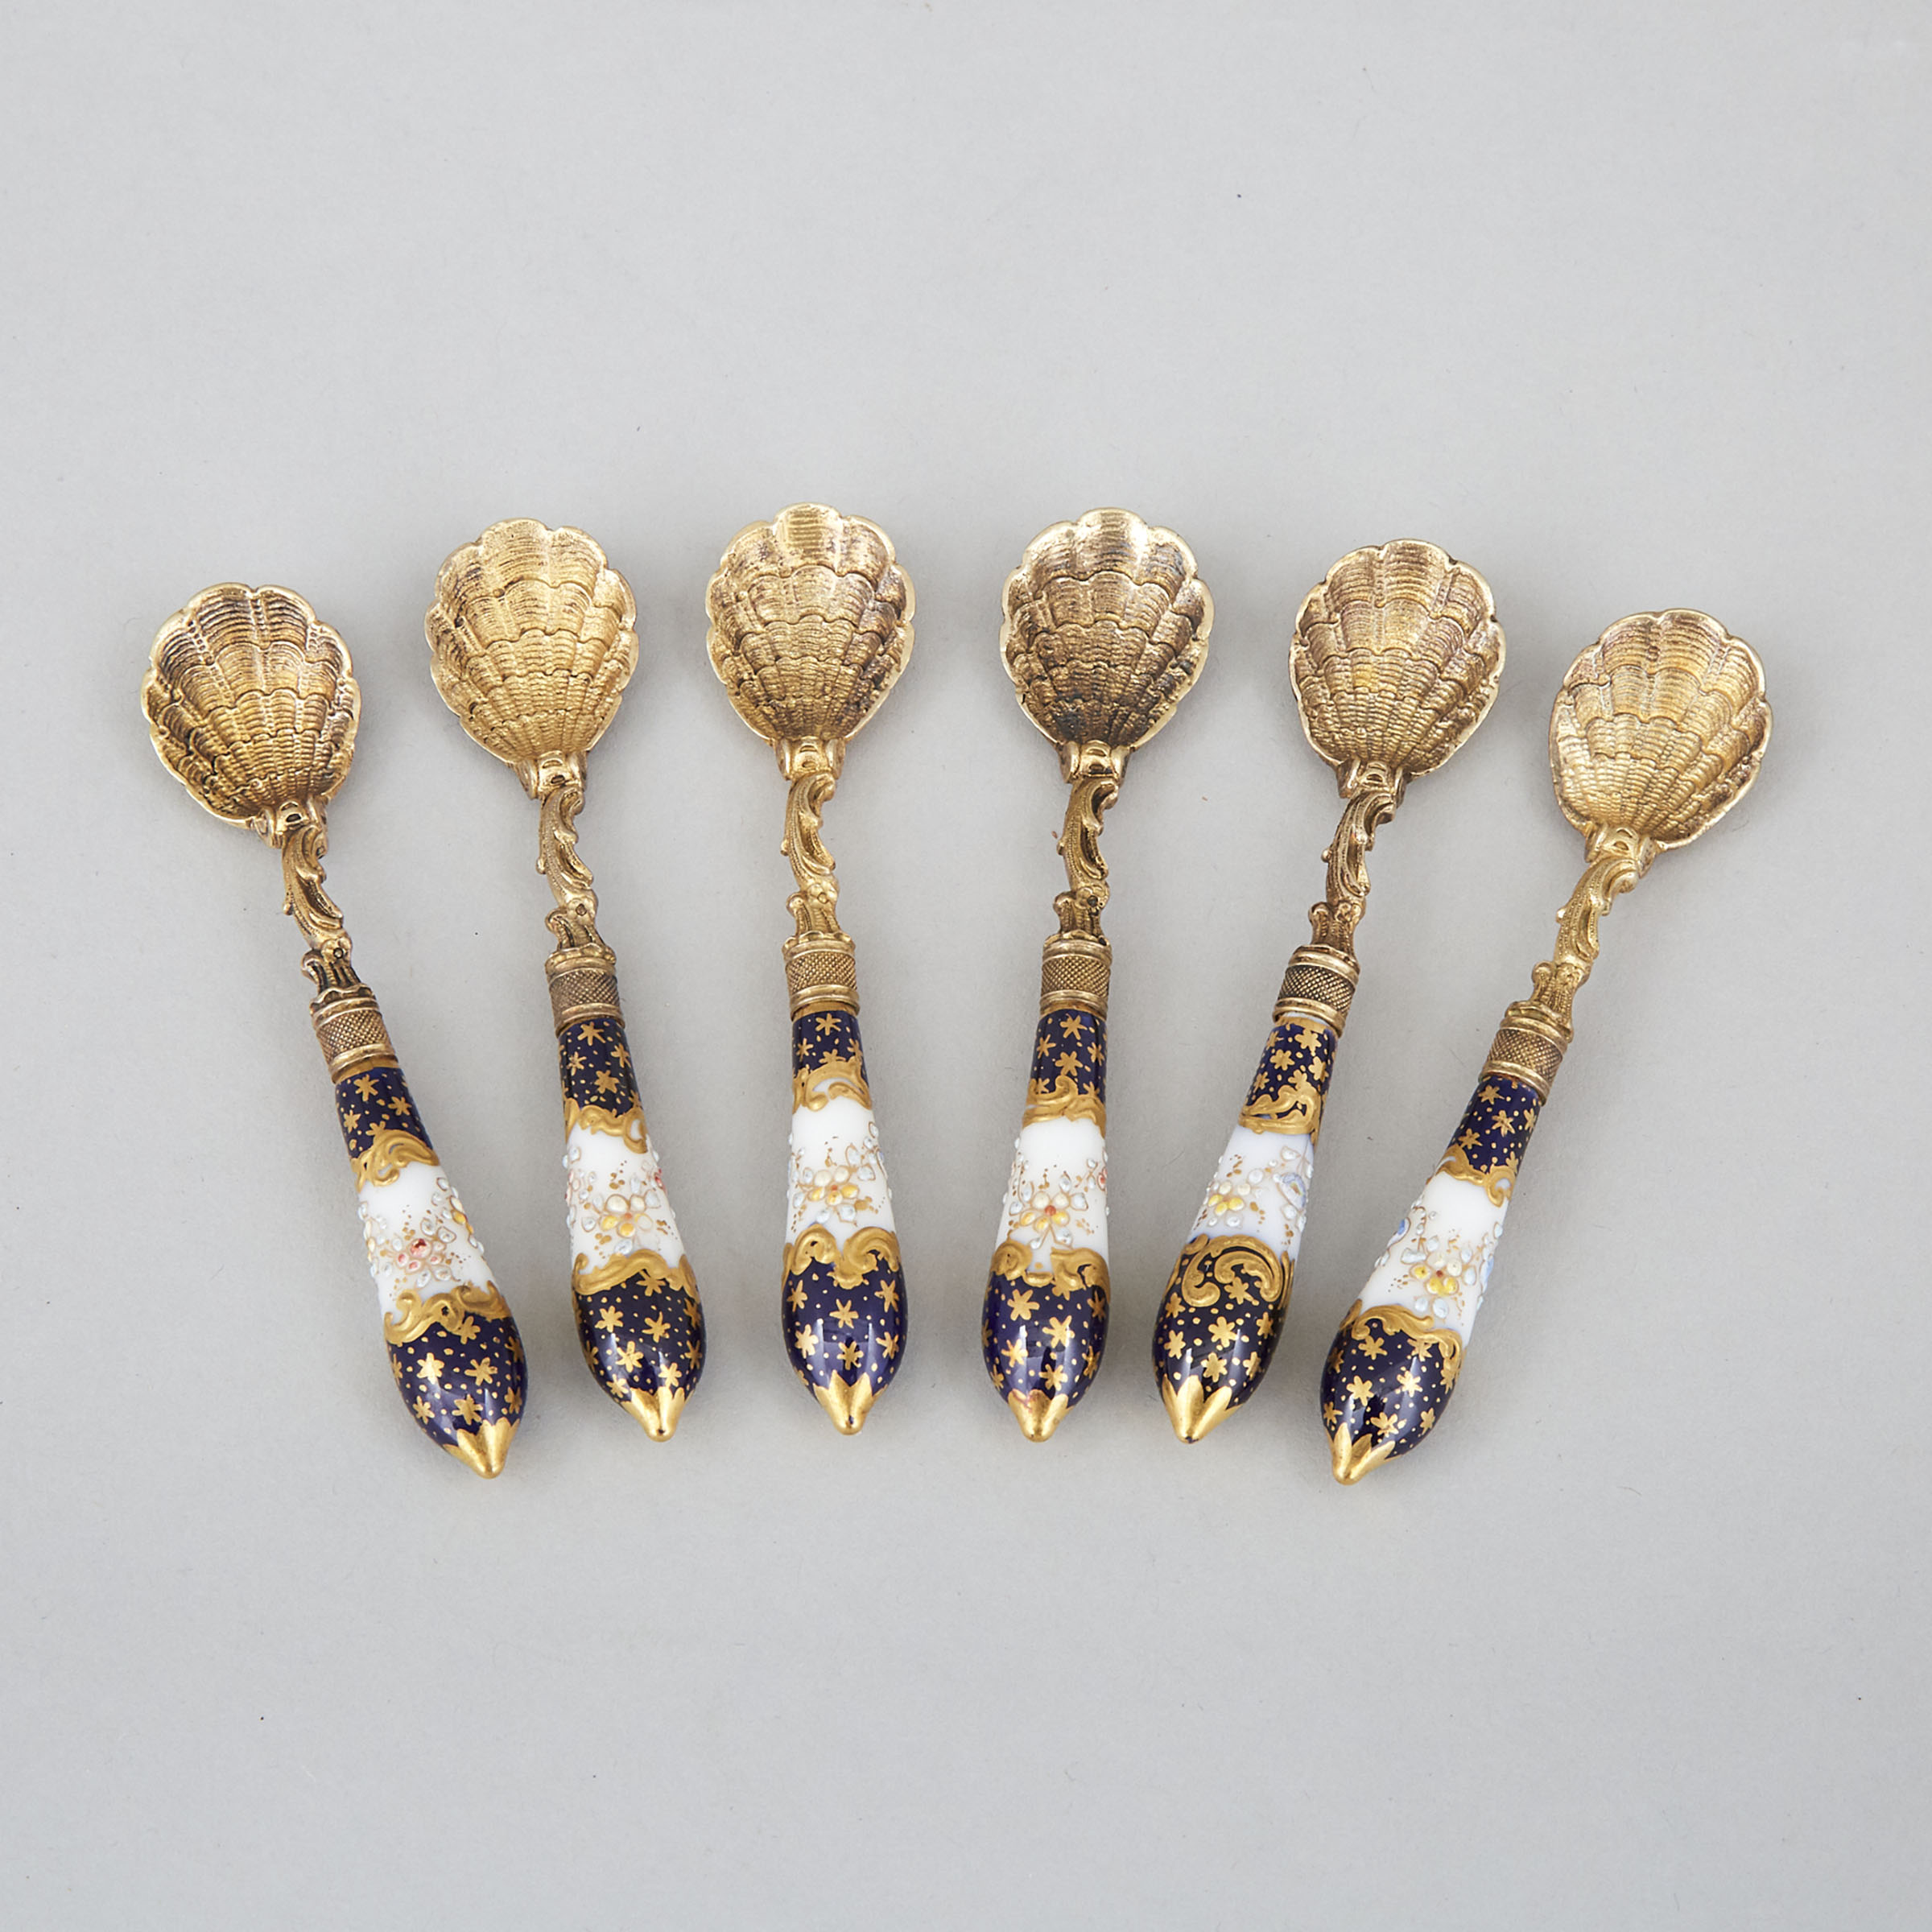 Six German Porcelain Handled Silver-Gilt Salt Spoons, c.1900